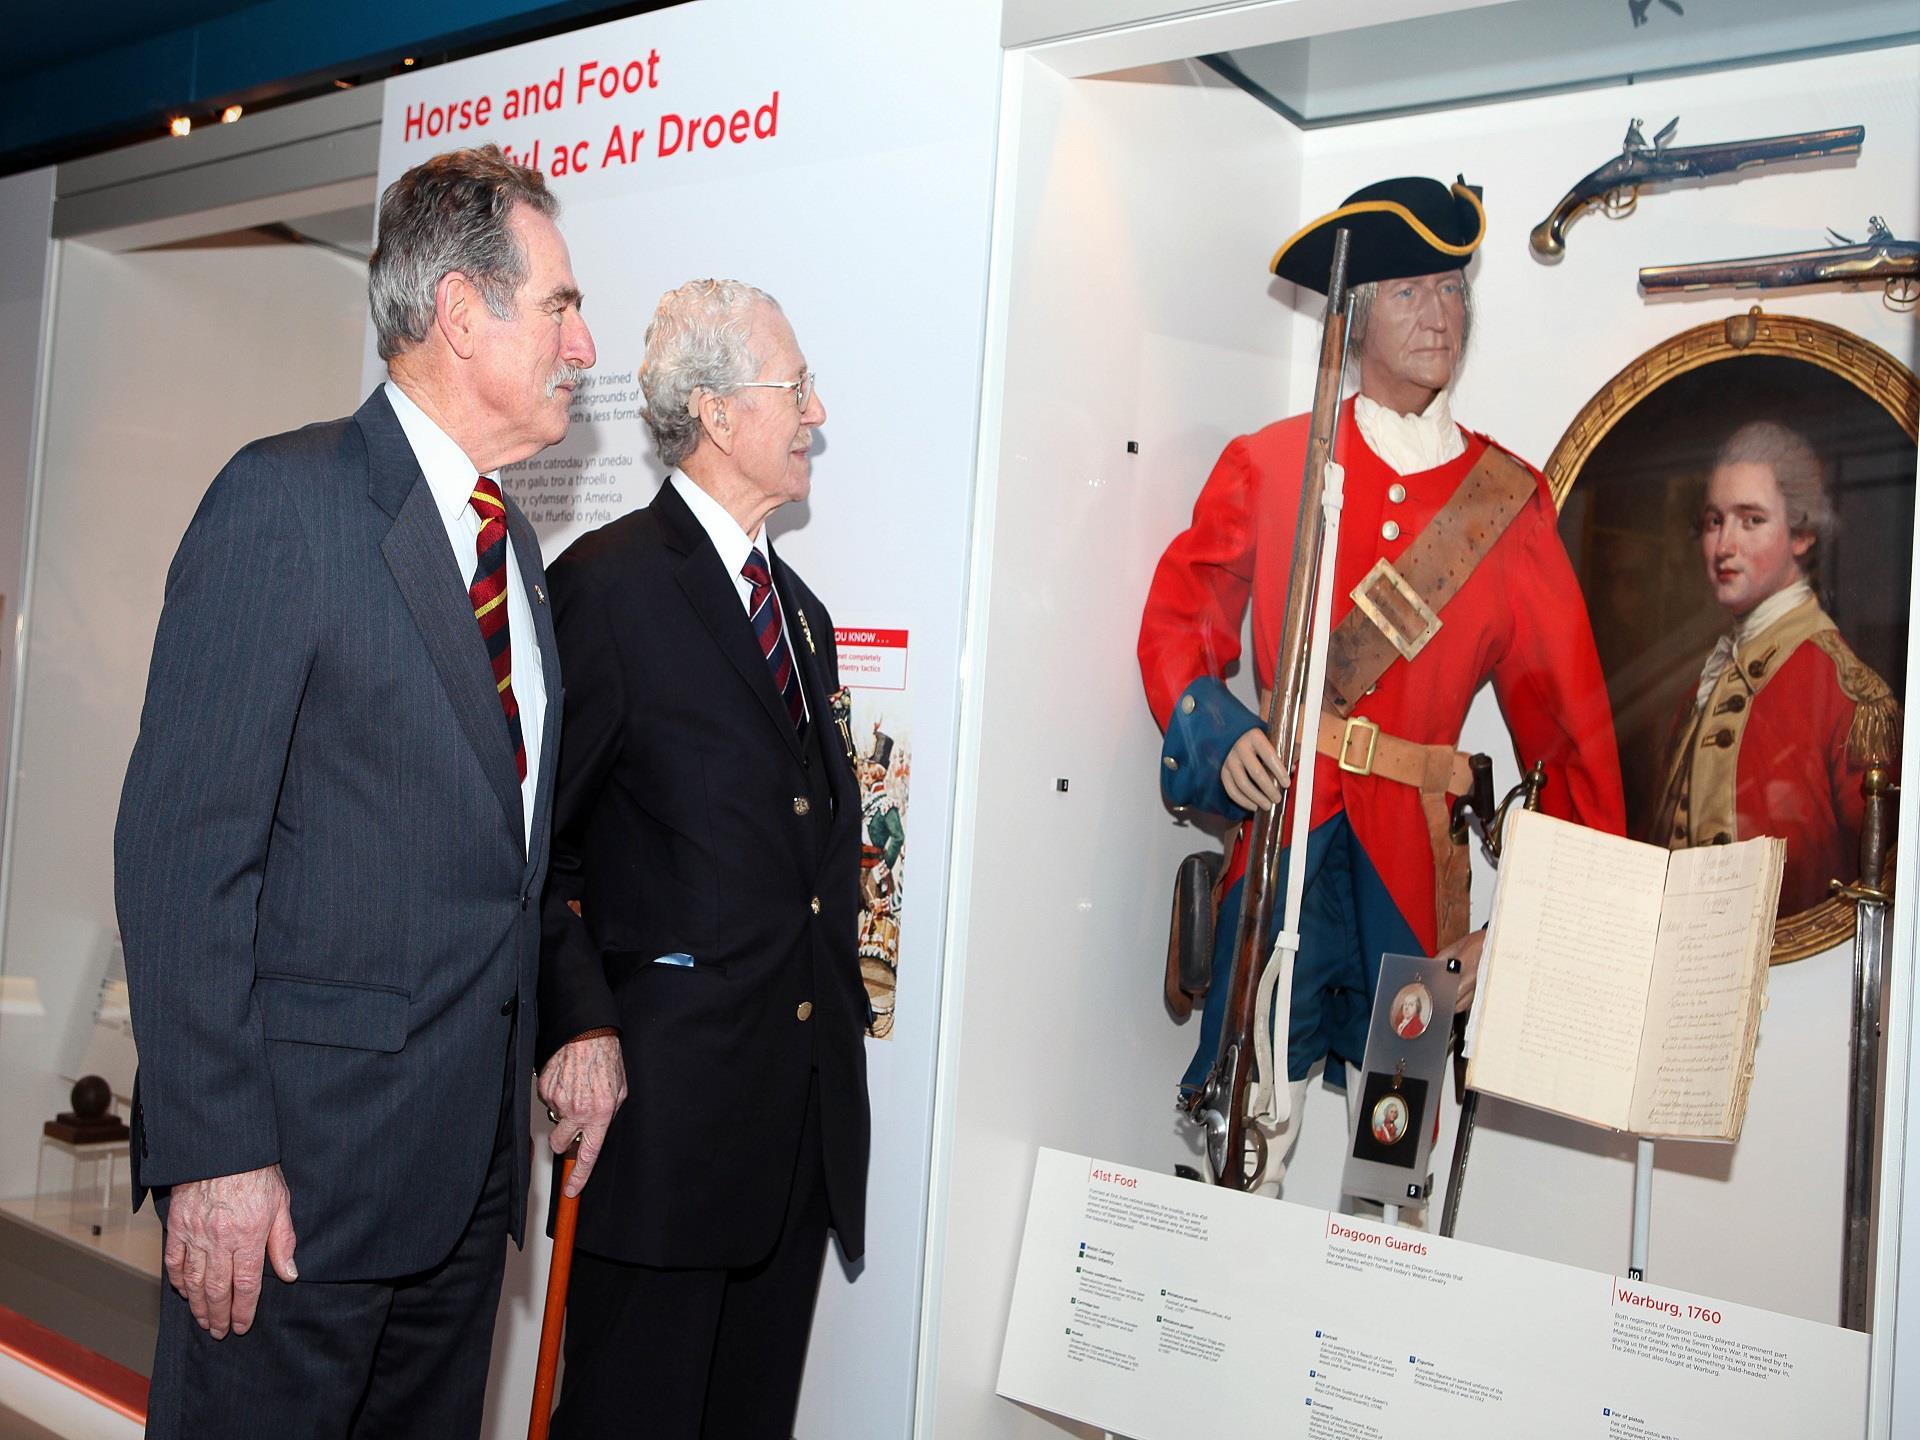 Military veterans exploring the museum